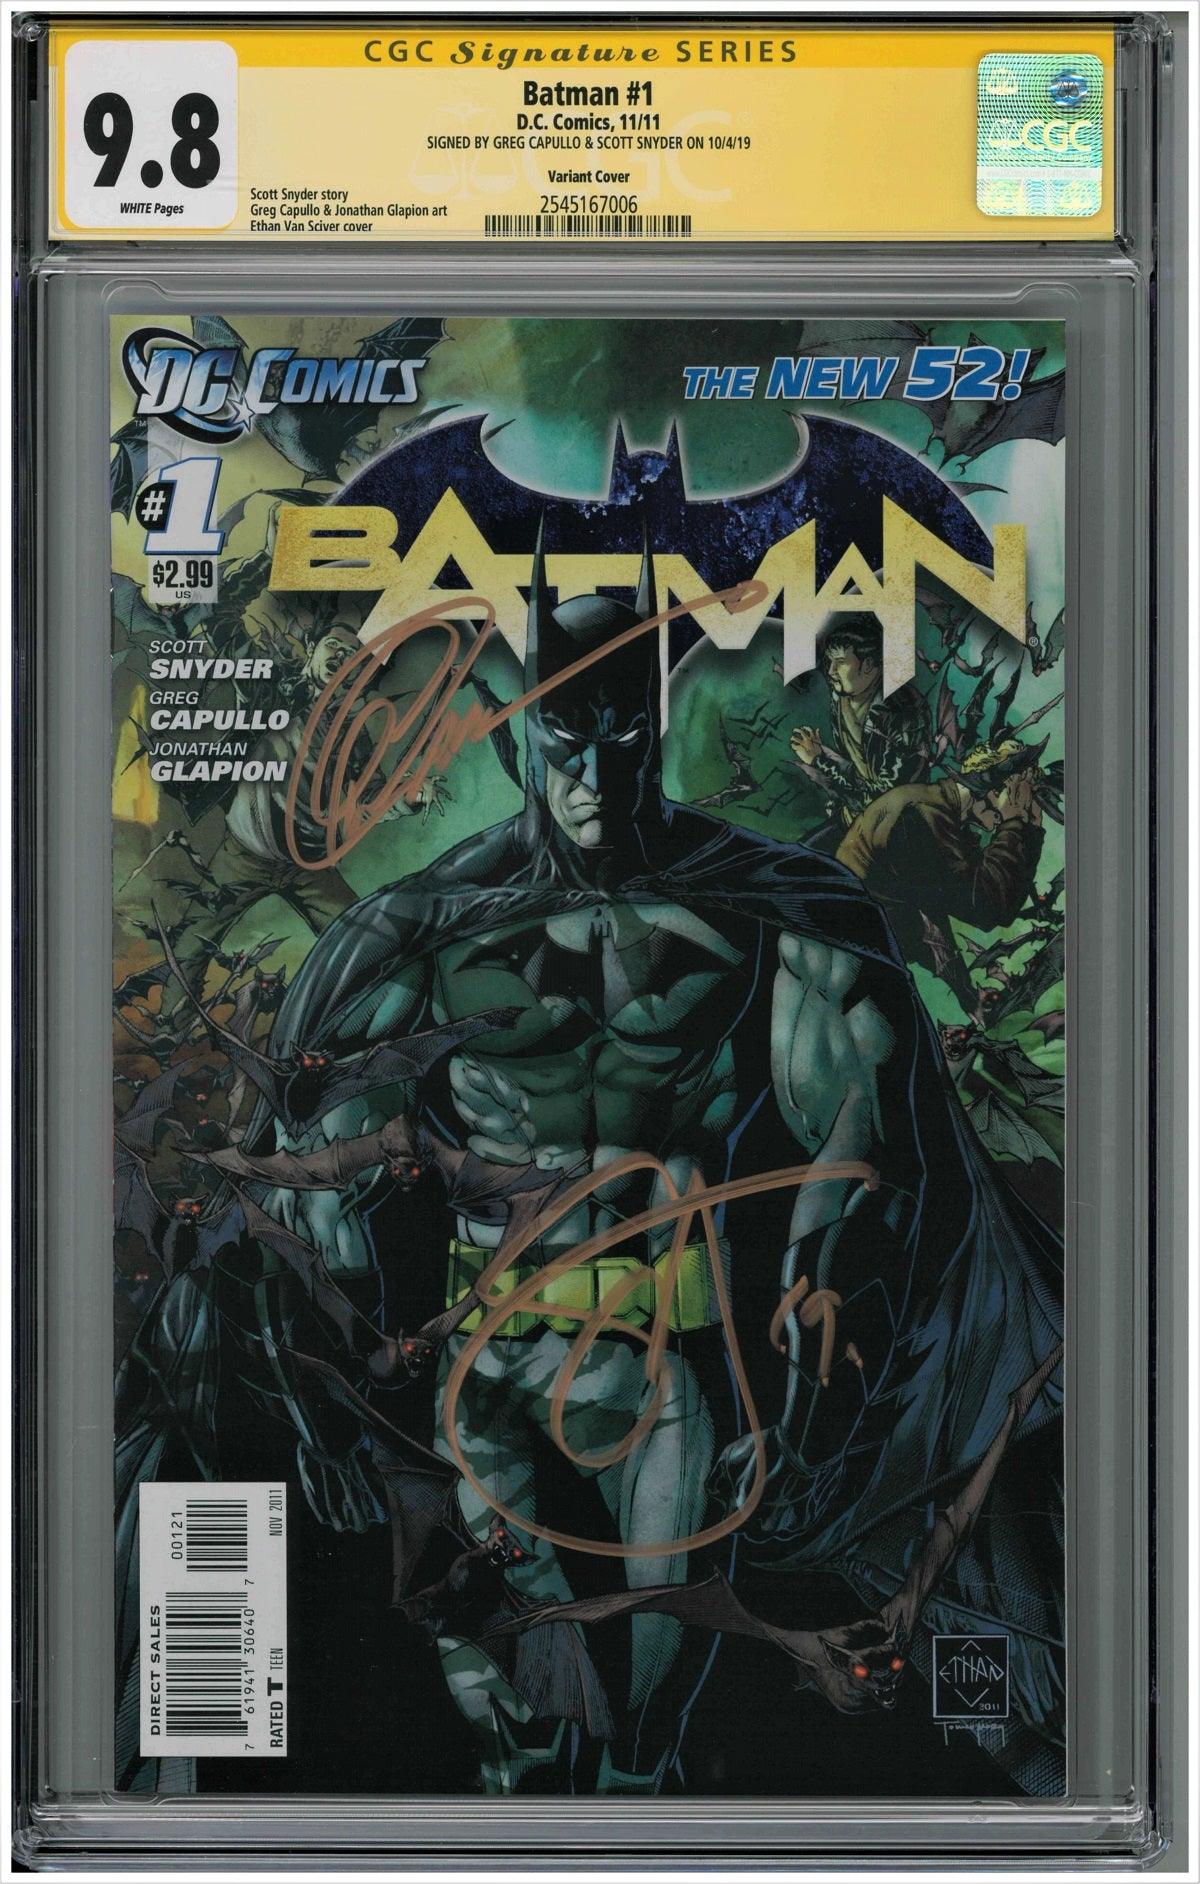 CGC BATMAN VOL 2 #1 VARIANT COVER (9.8) SIGNATURE SERIES - SIGNED BY GREG CAPULLO & SCOTT SNYDER - Kings Comics